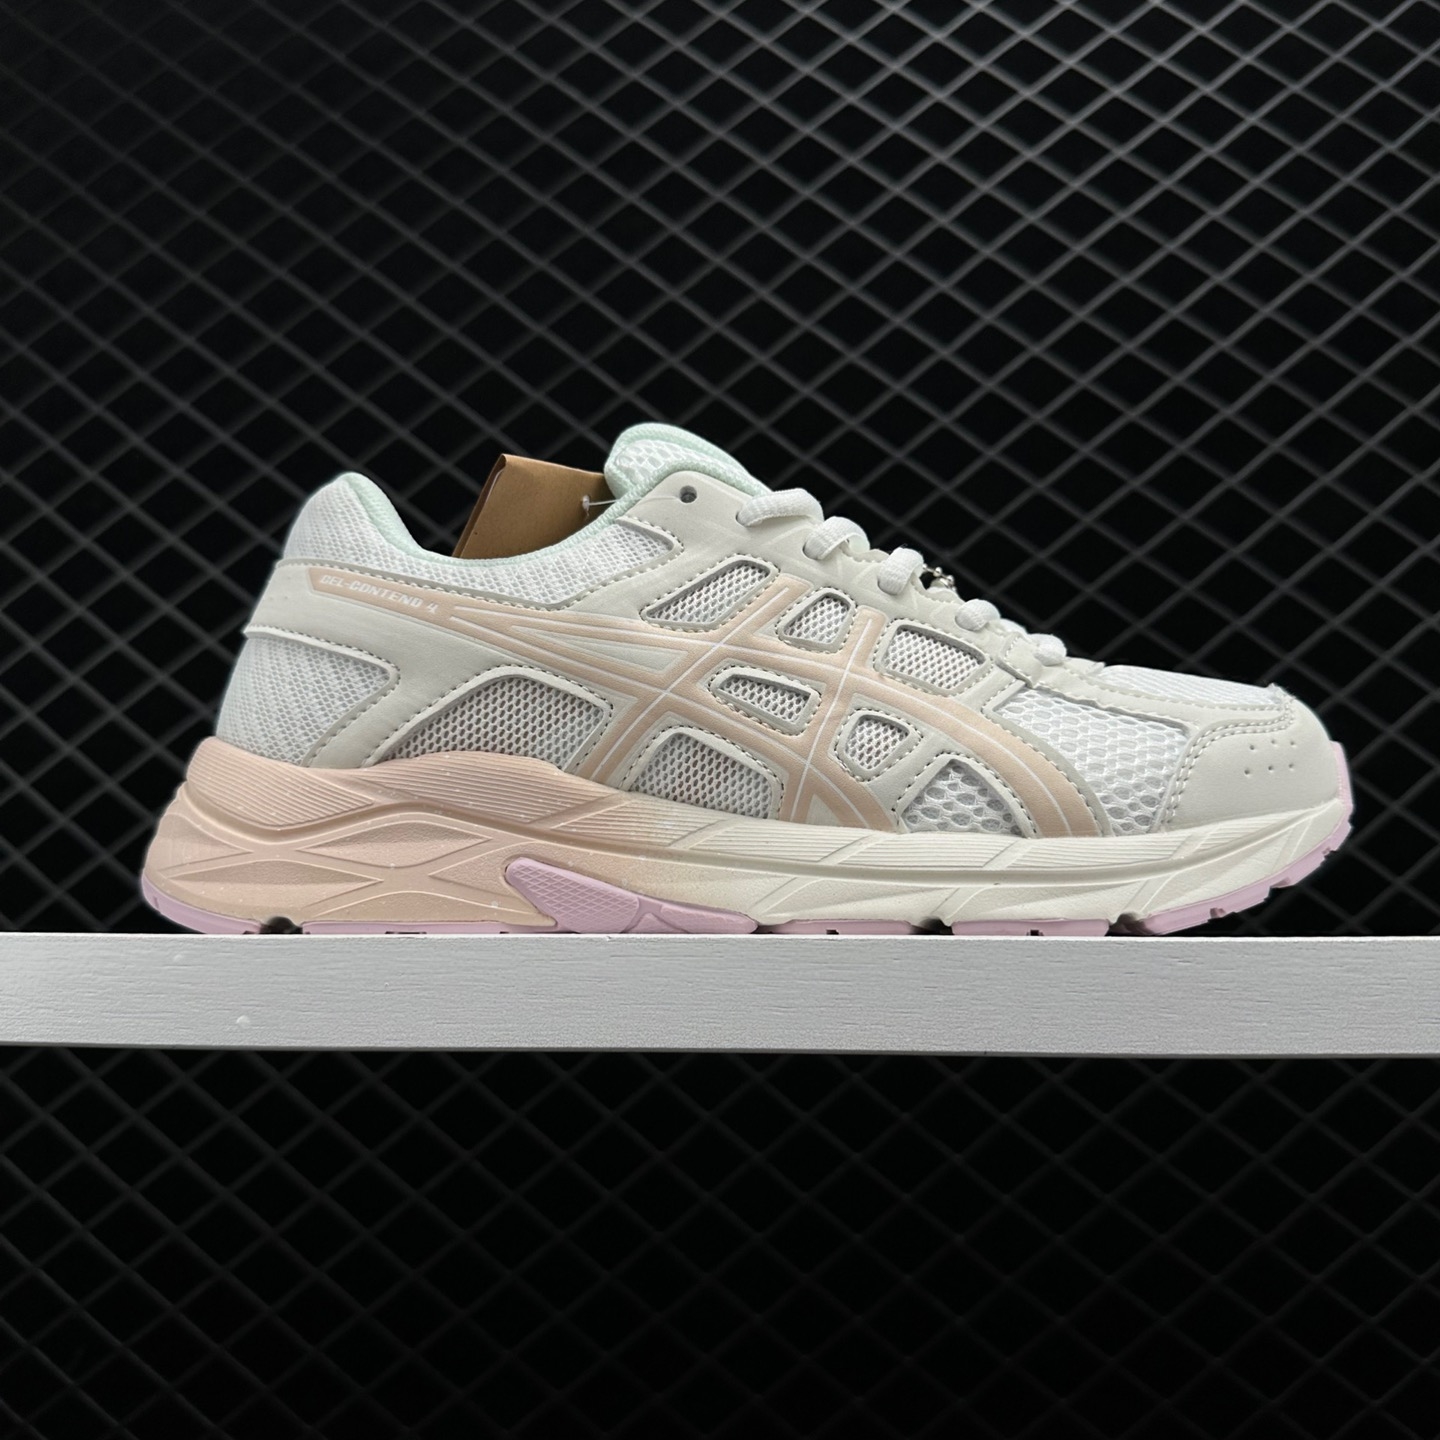 Asics Gel-contend 4 White Pink T8D9Q-105 Running Shoes – Lightweight & Comfortable!